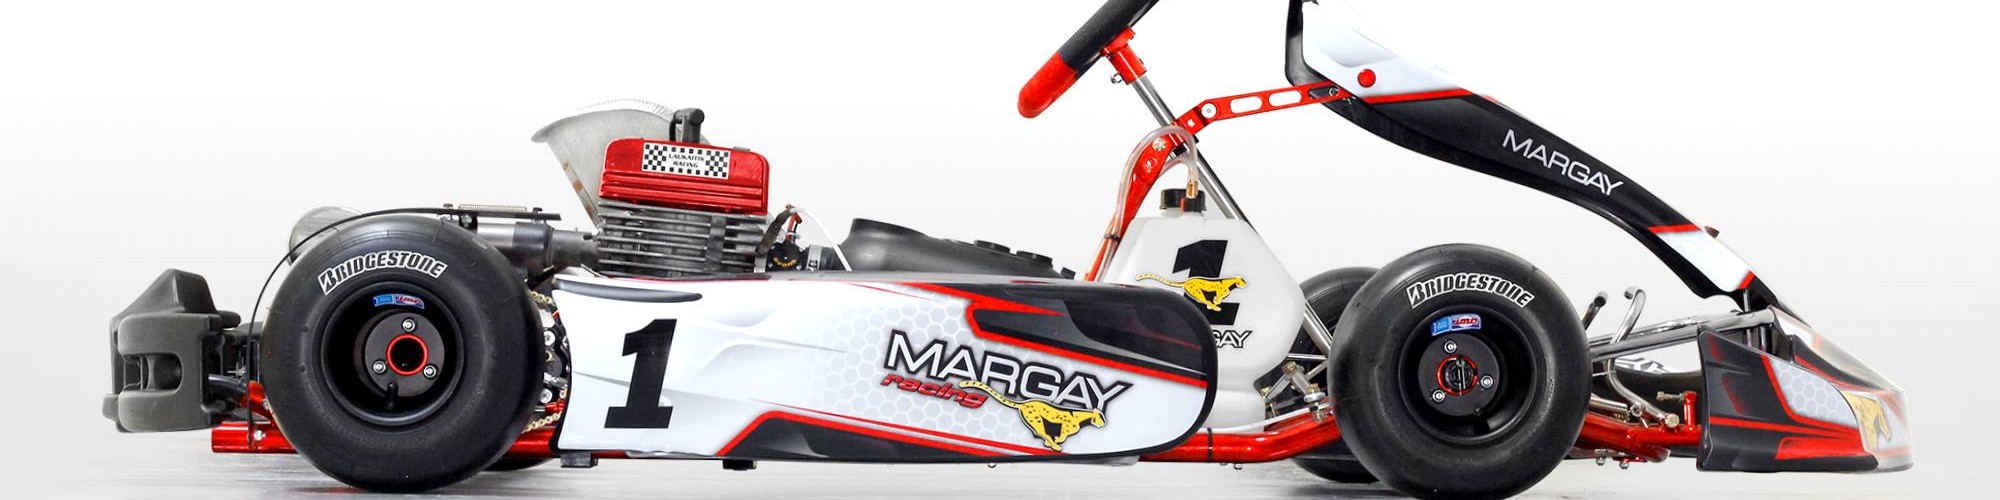 Margay Racing, LLC  cover image